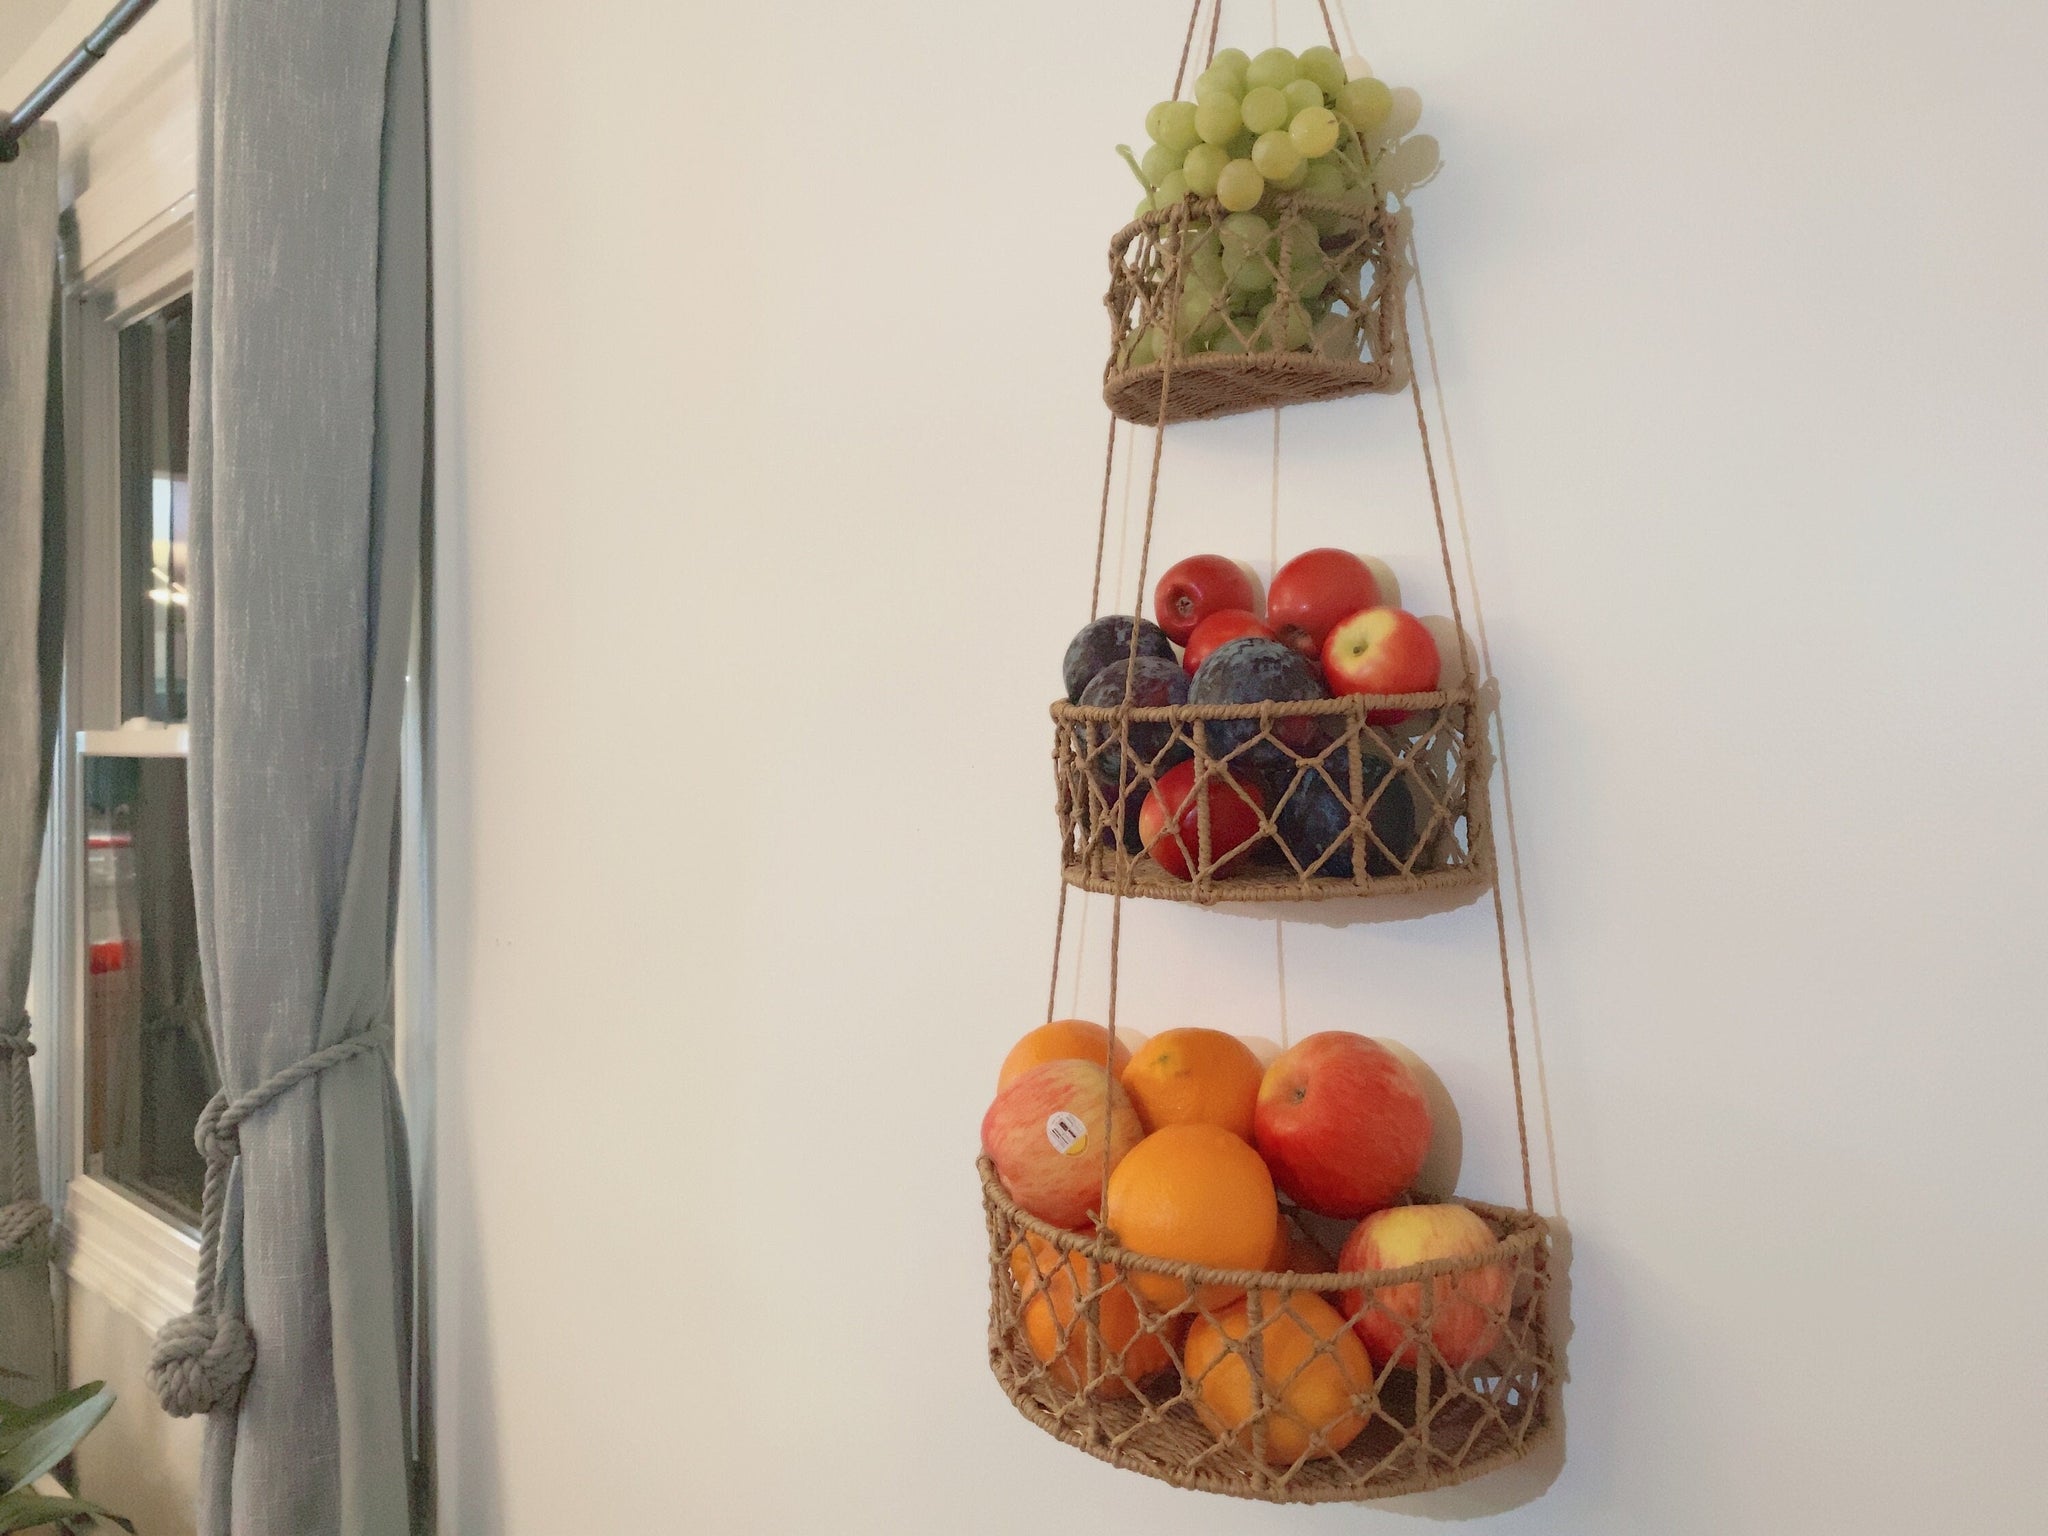 Three tier hanging baskets, Kitchen baskets, Set of 3 hanging